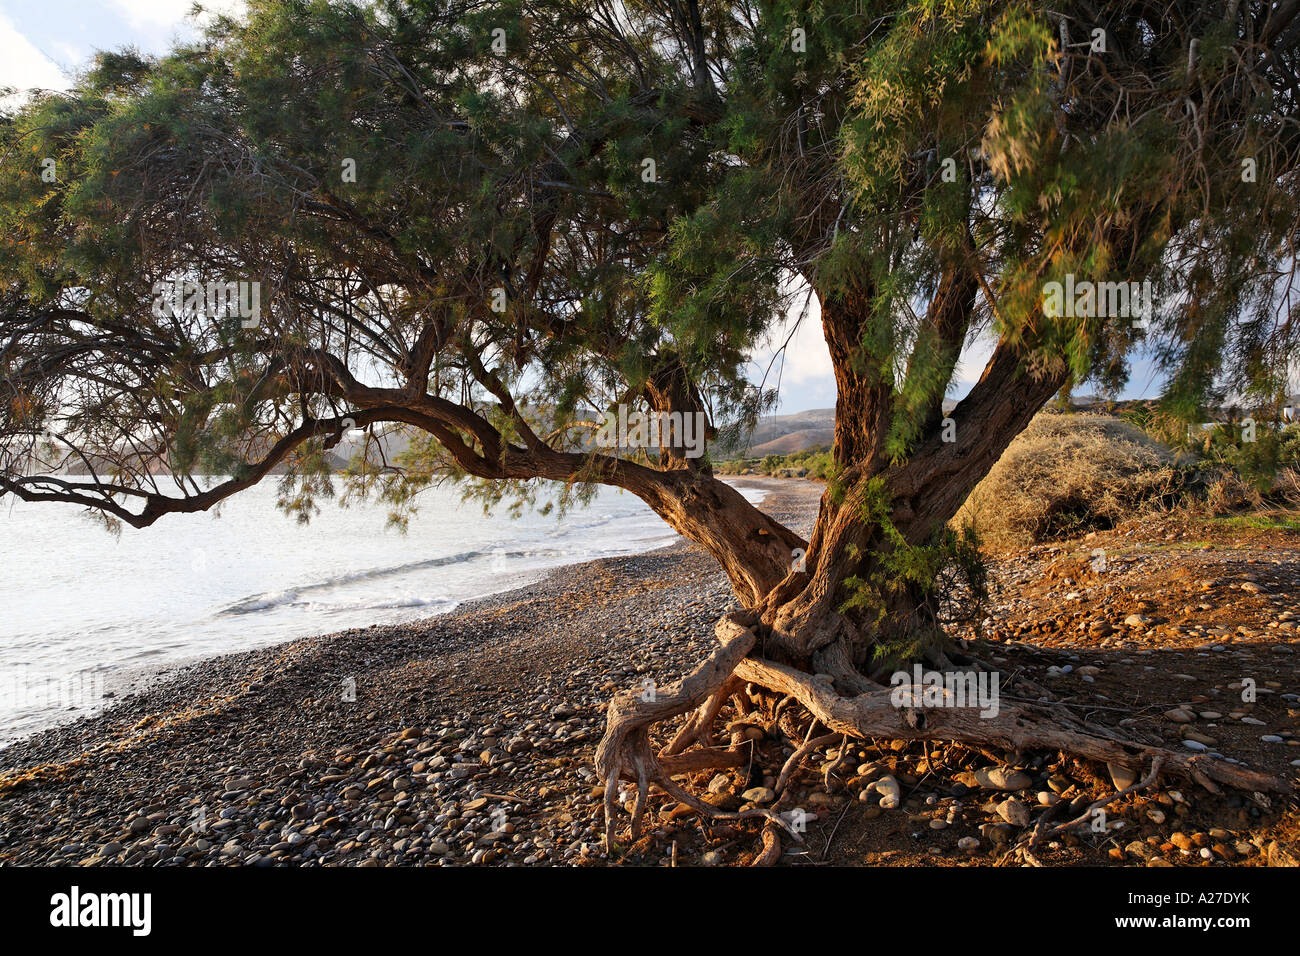 Old tamarisk (Tamarix africana) at Kouremenos beach near Palekastro, eastern Crete, Greece Stock Photo